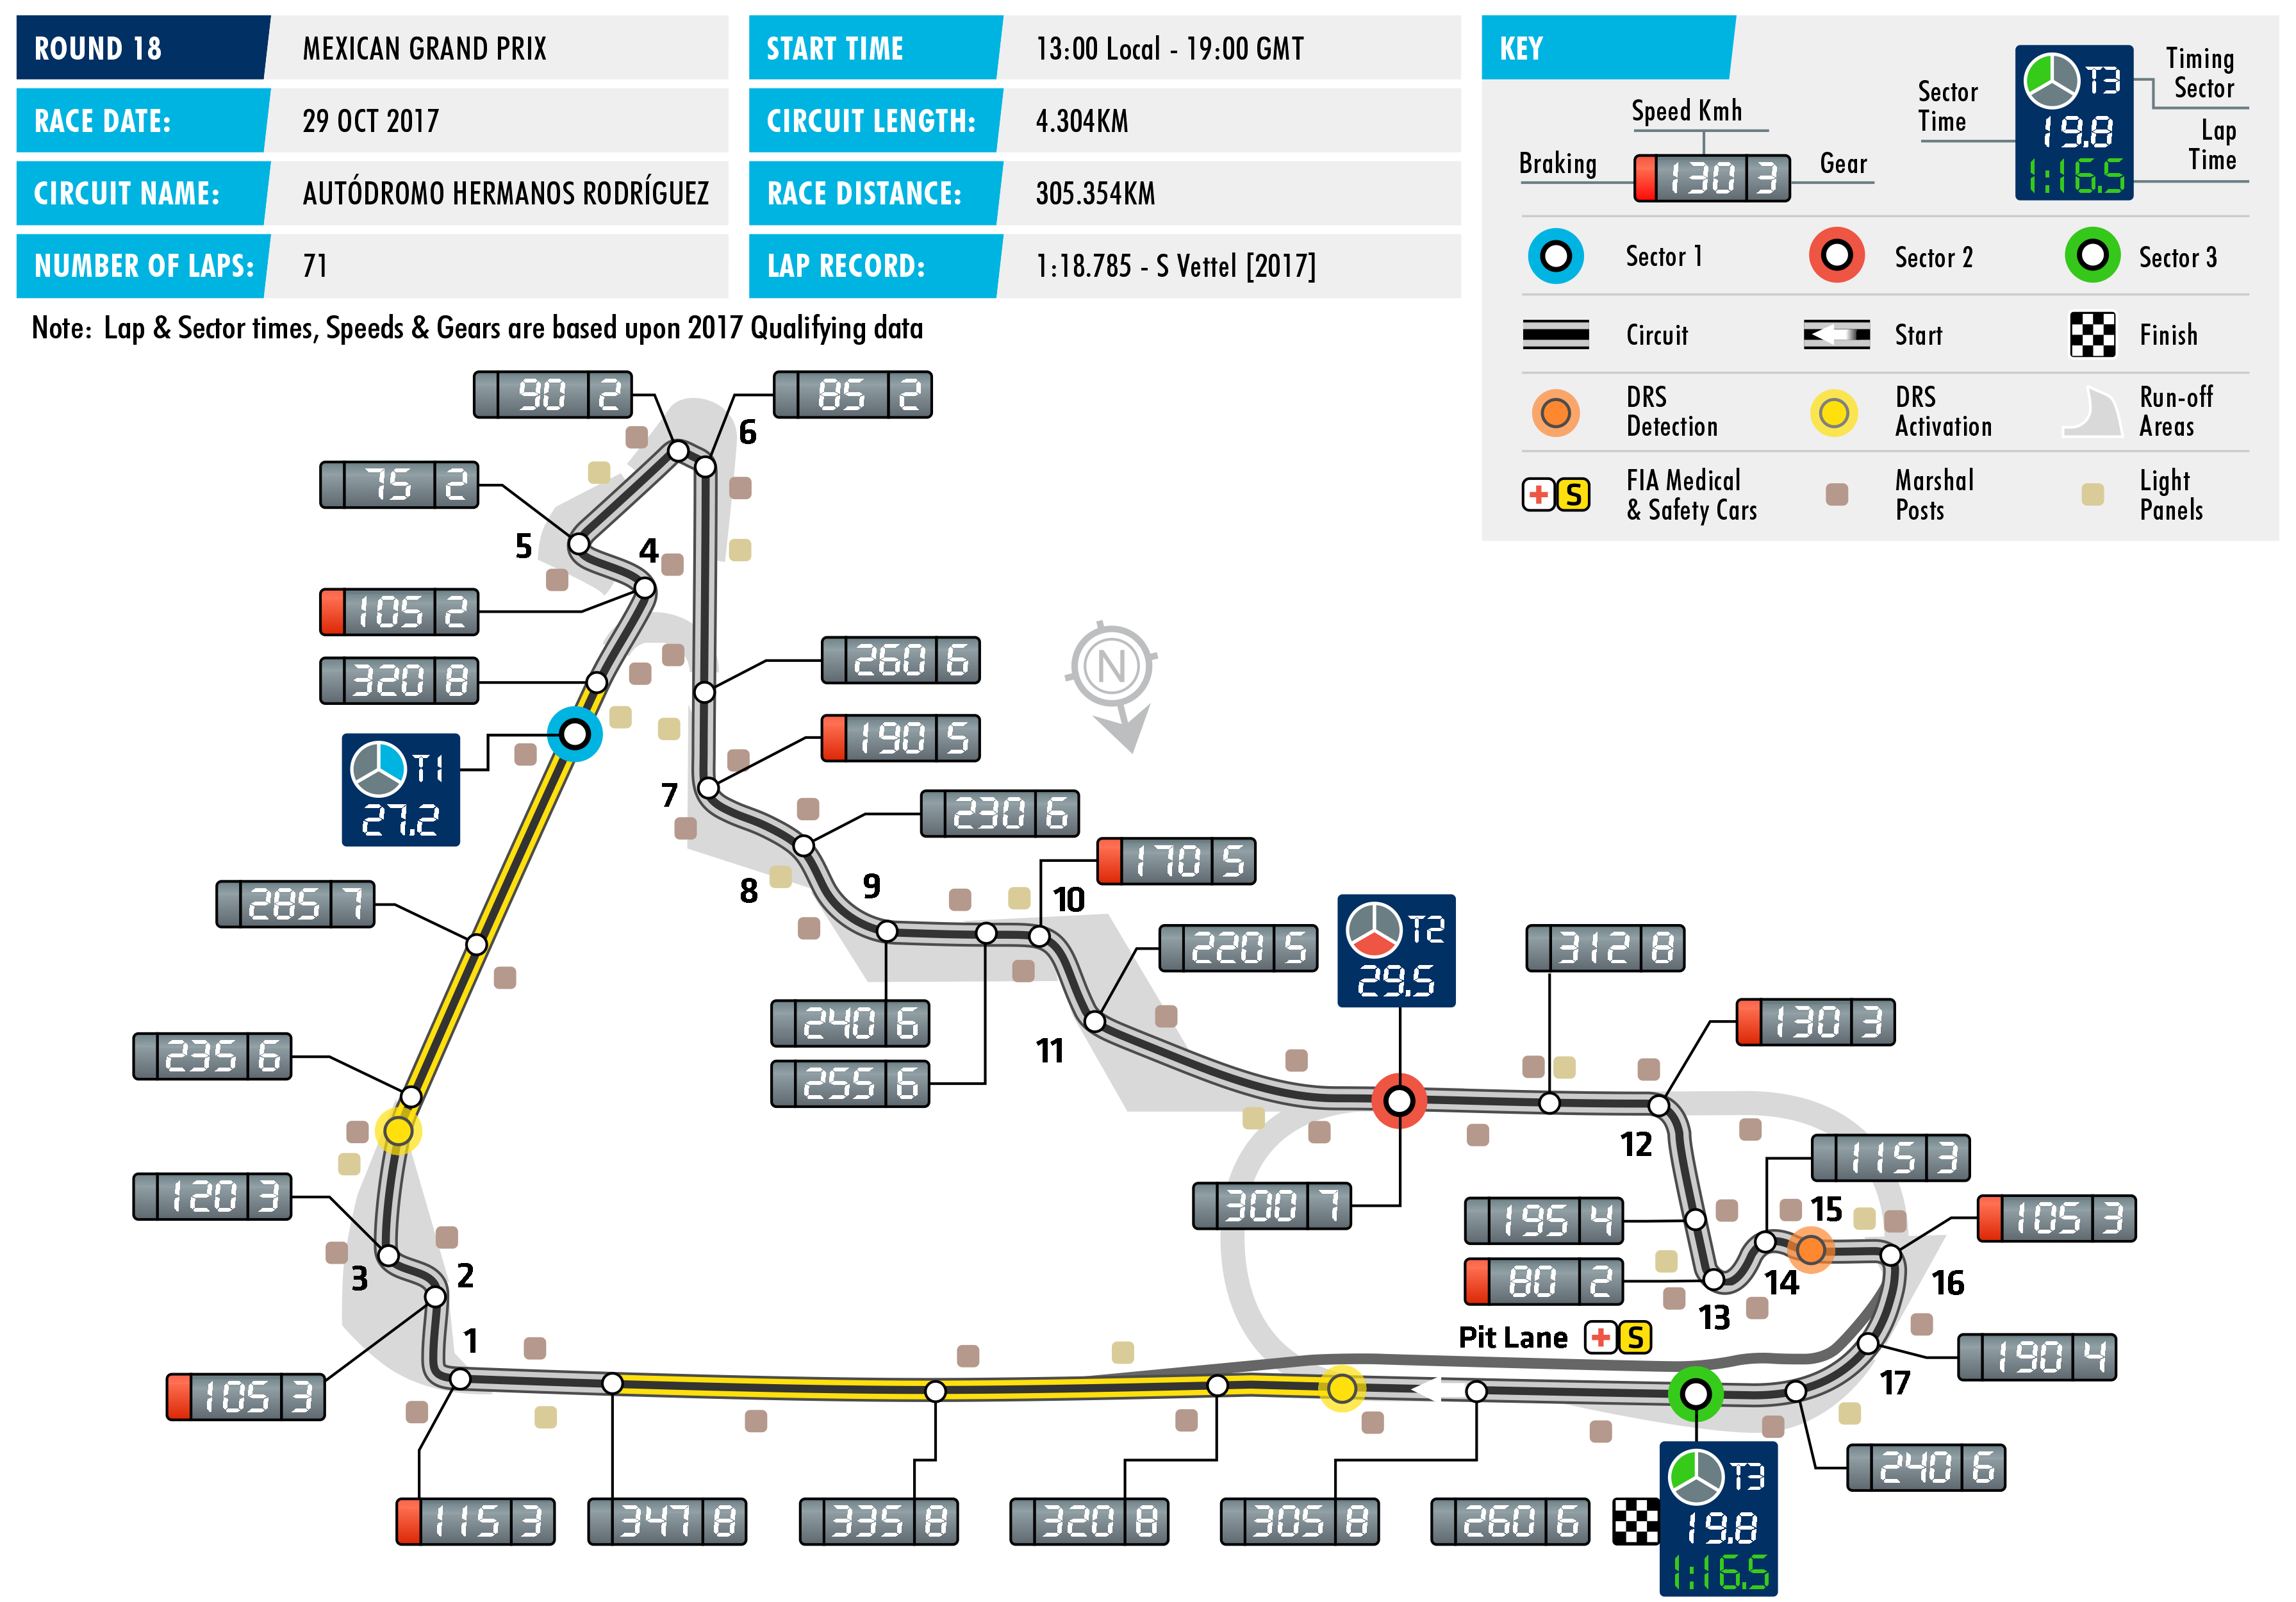 2017 Mexican Grand Prix - Circuit Map